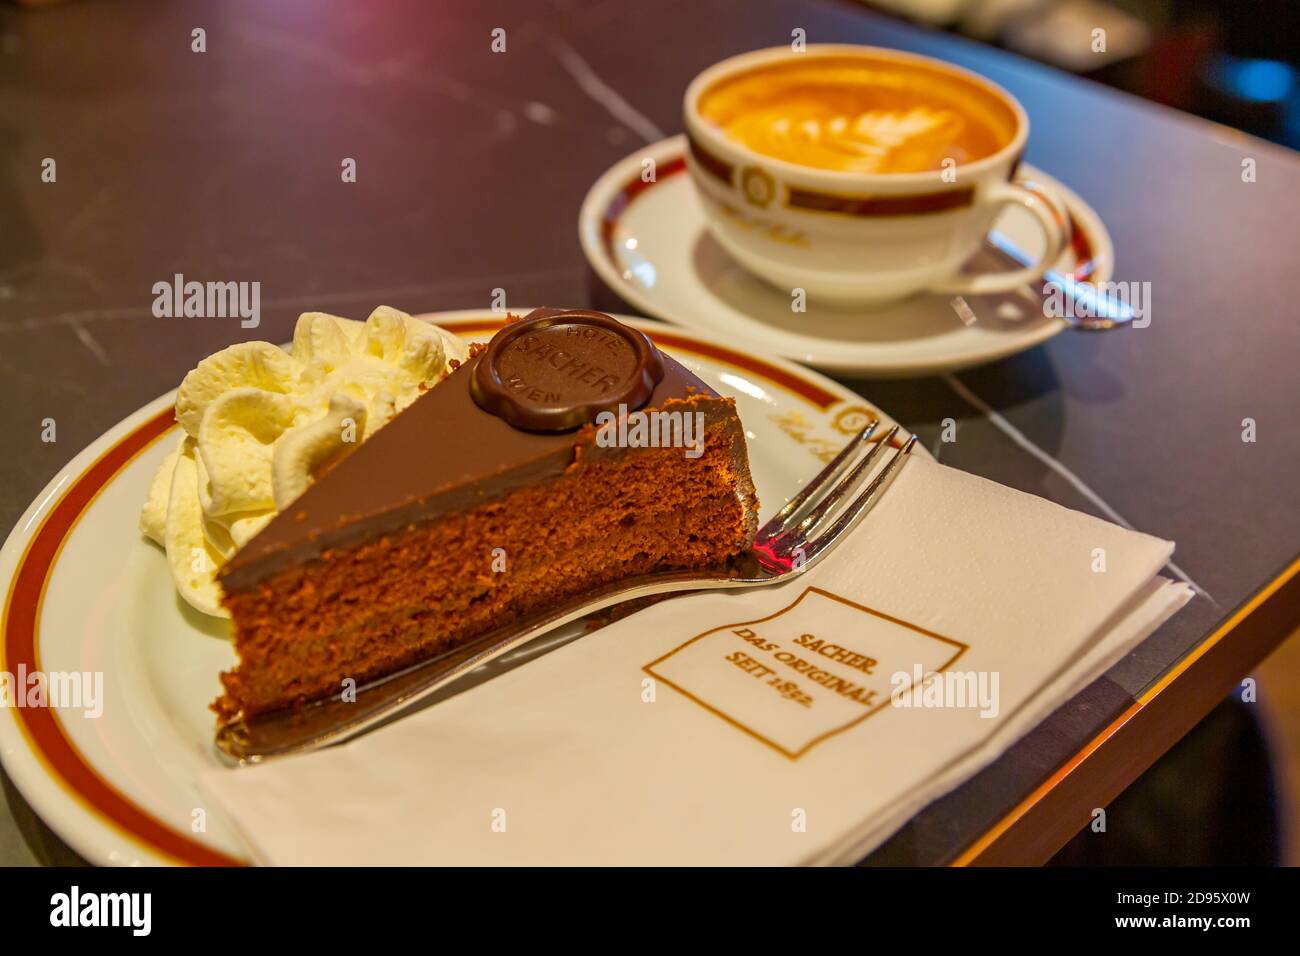 Traditional Sacher Chocolate Cake and coffee, Café Sacher Wien, Vienna, Austria, Europe Stock Photo